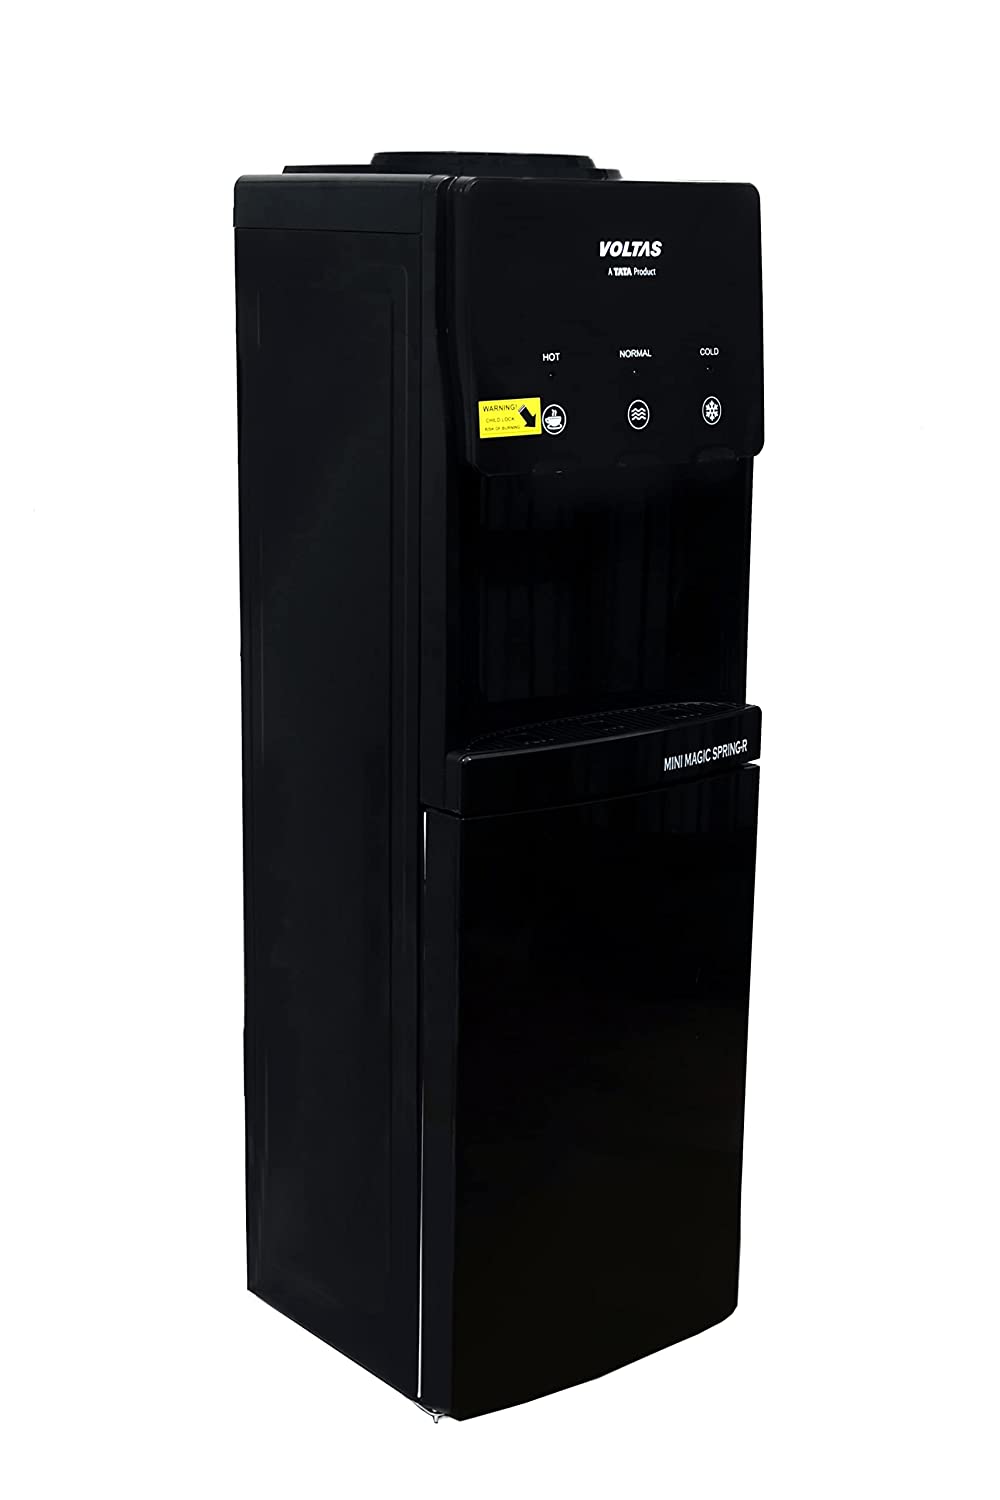 Voltas Floor Mounted Water Dispenser Minimagic SPRING R Plus Black - Mahajan Electronics Online